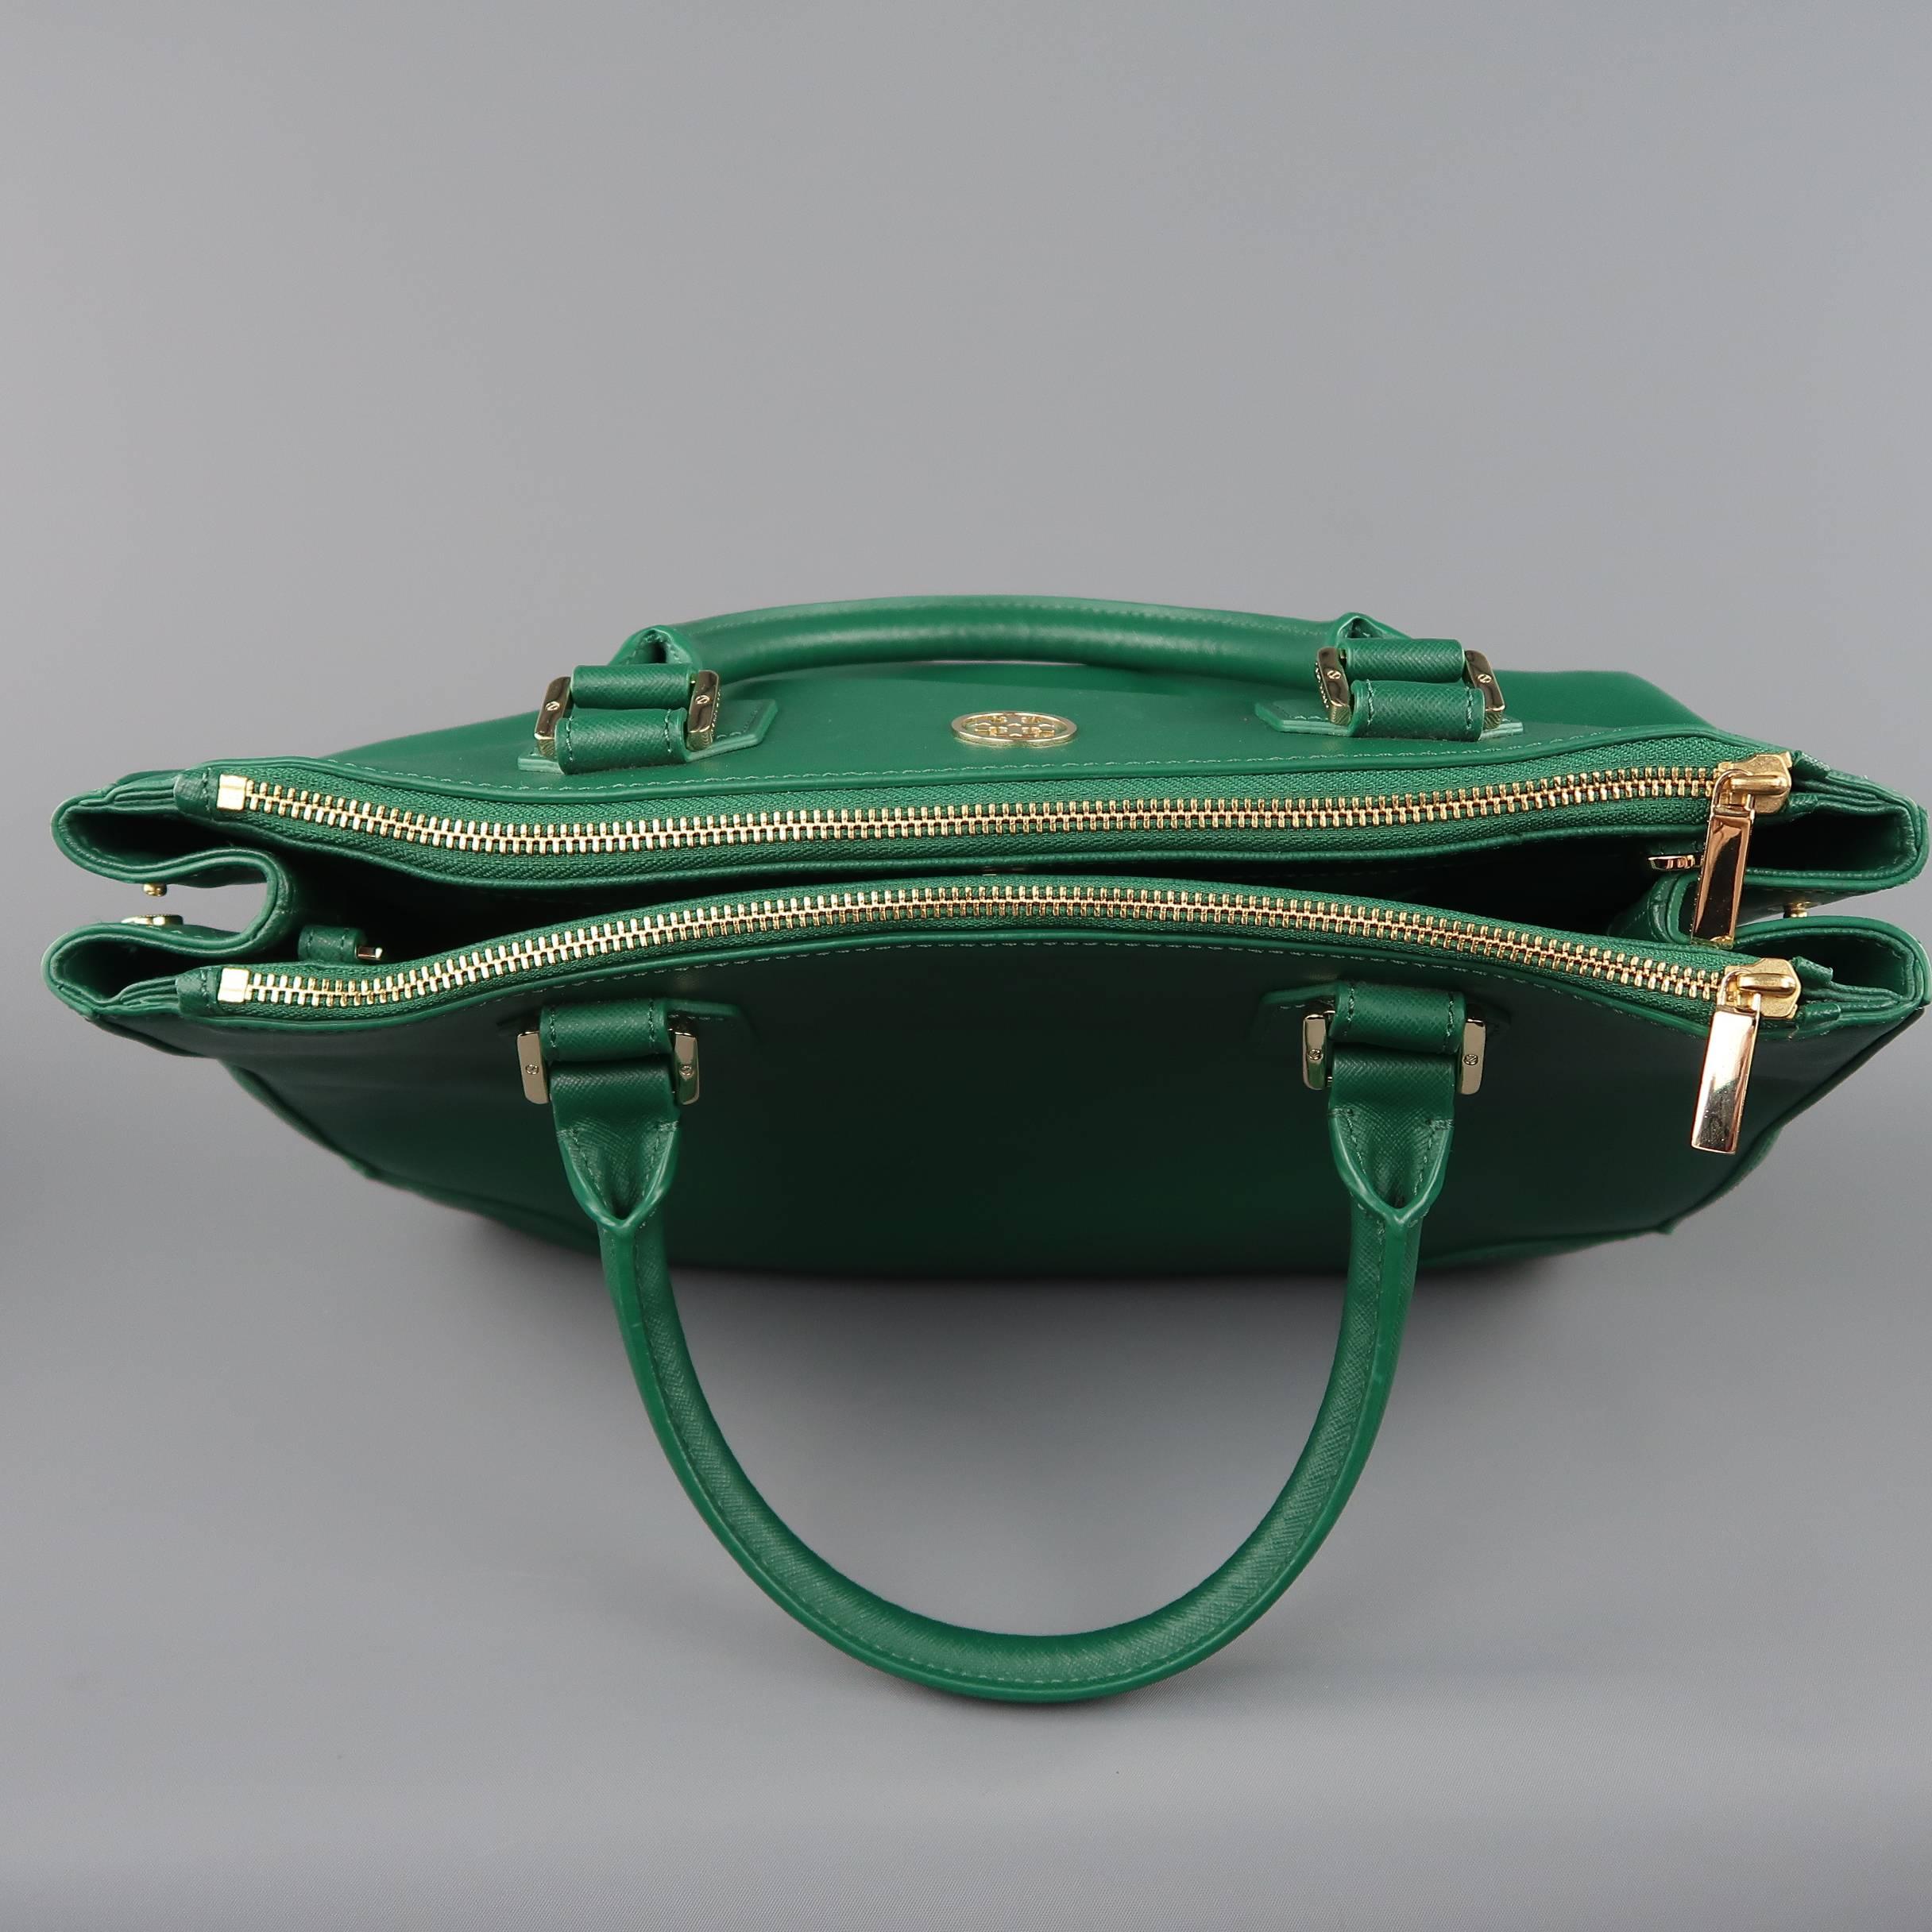 TORY BURCH Green Leather ROBINSON Tote Handbag 2